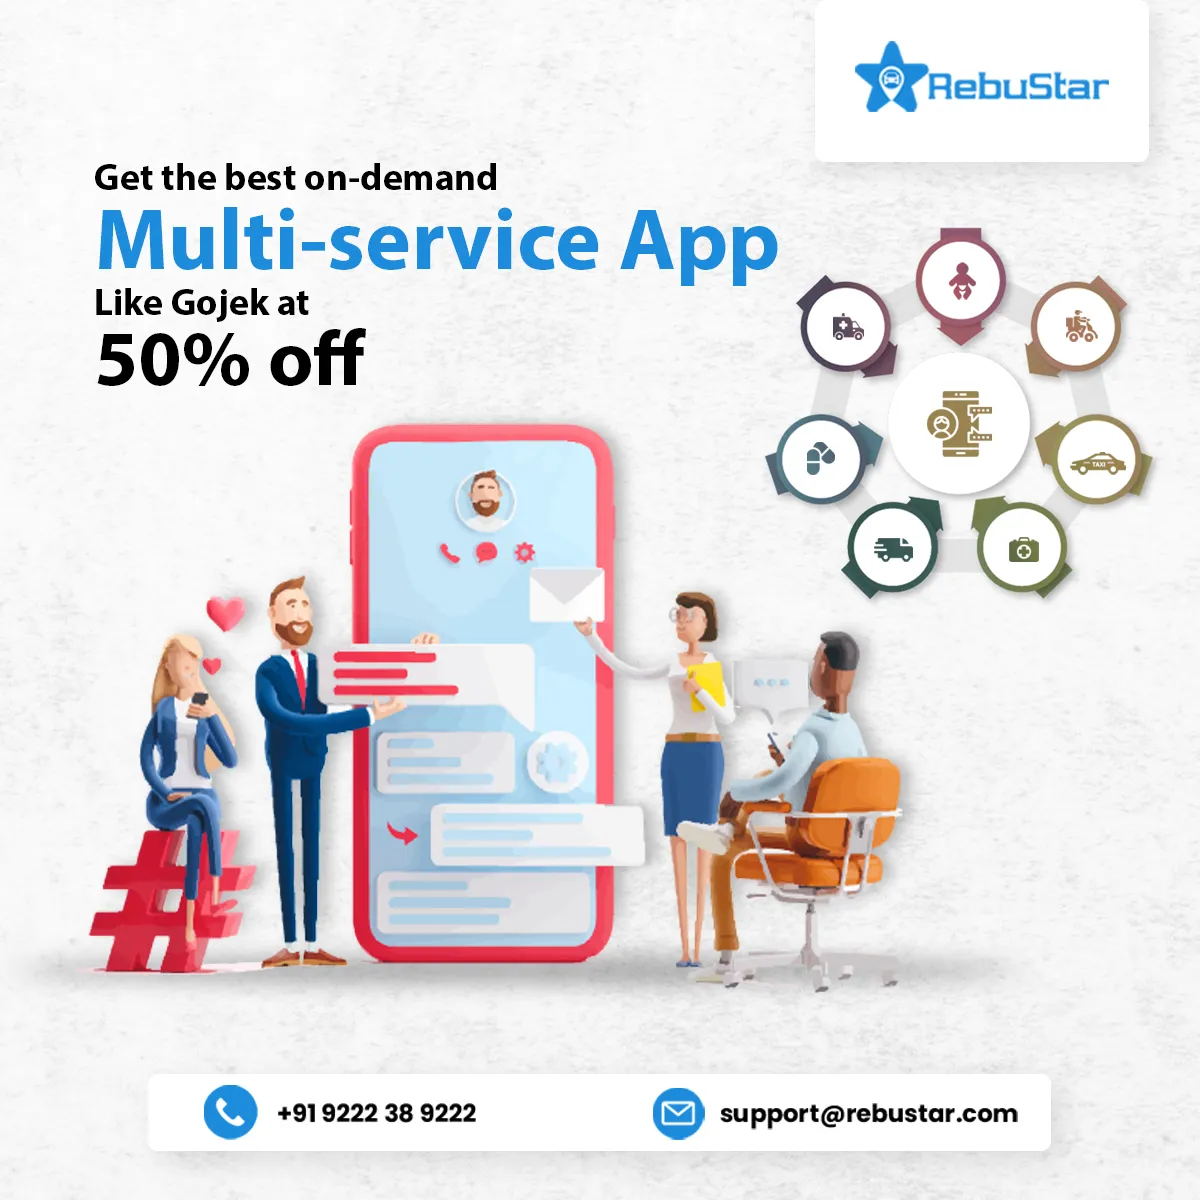 Get the best on-demand Multi-service App Like Gojek at 50% off.